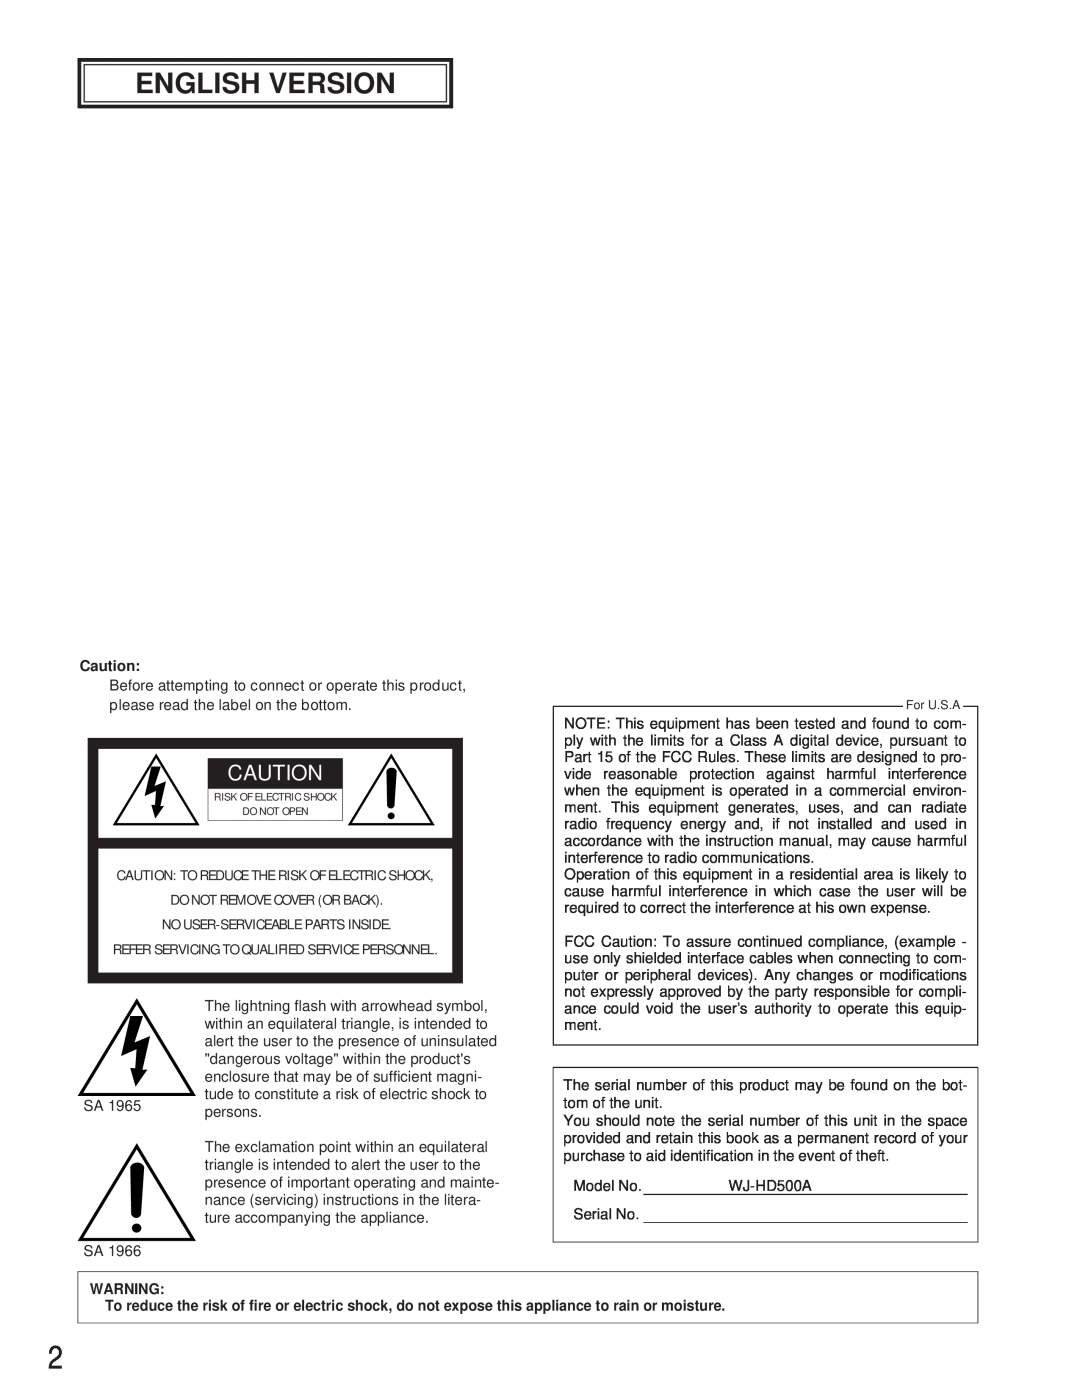 Panasonic WJ-HD500A manual English Version, Risk Of Electric Shock Do Not Open, For U.S.A 